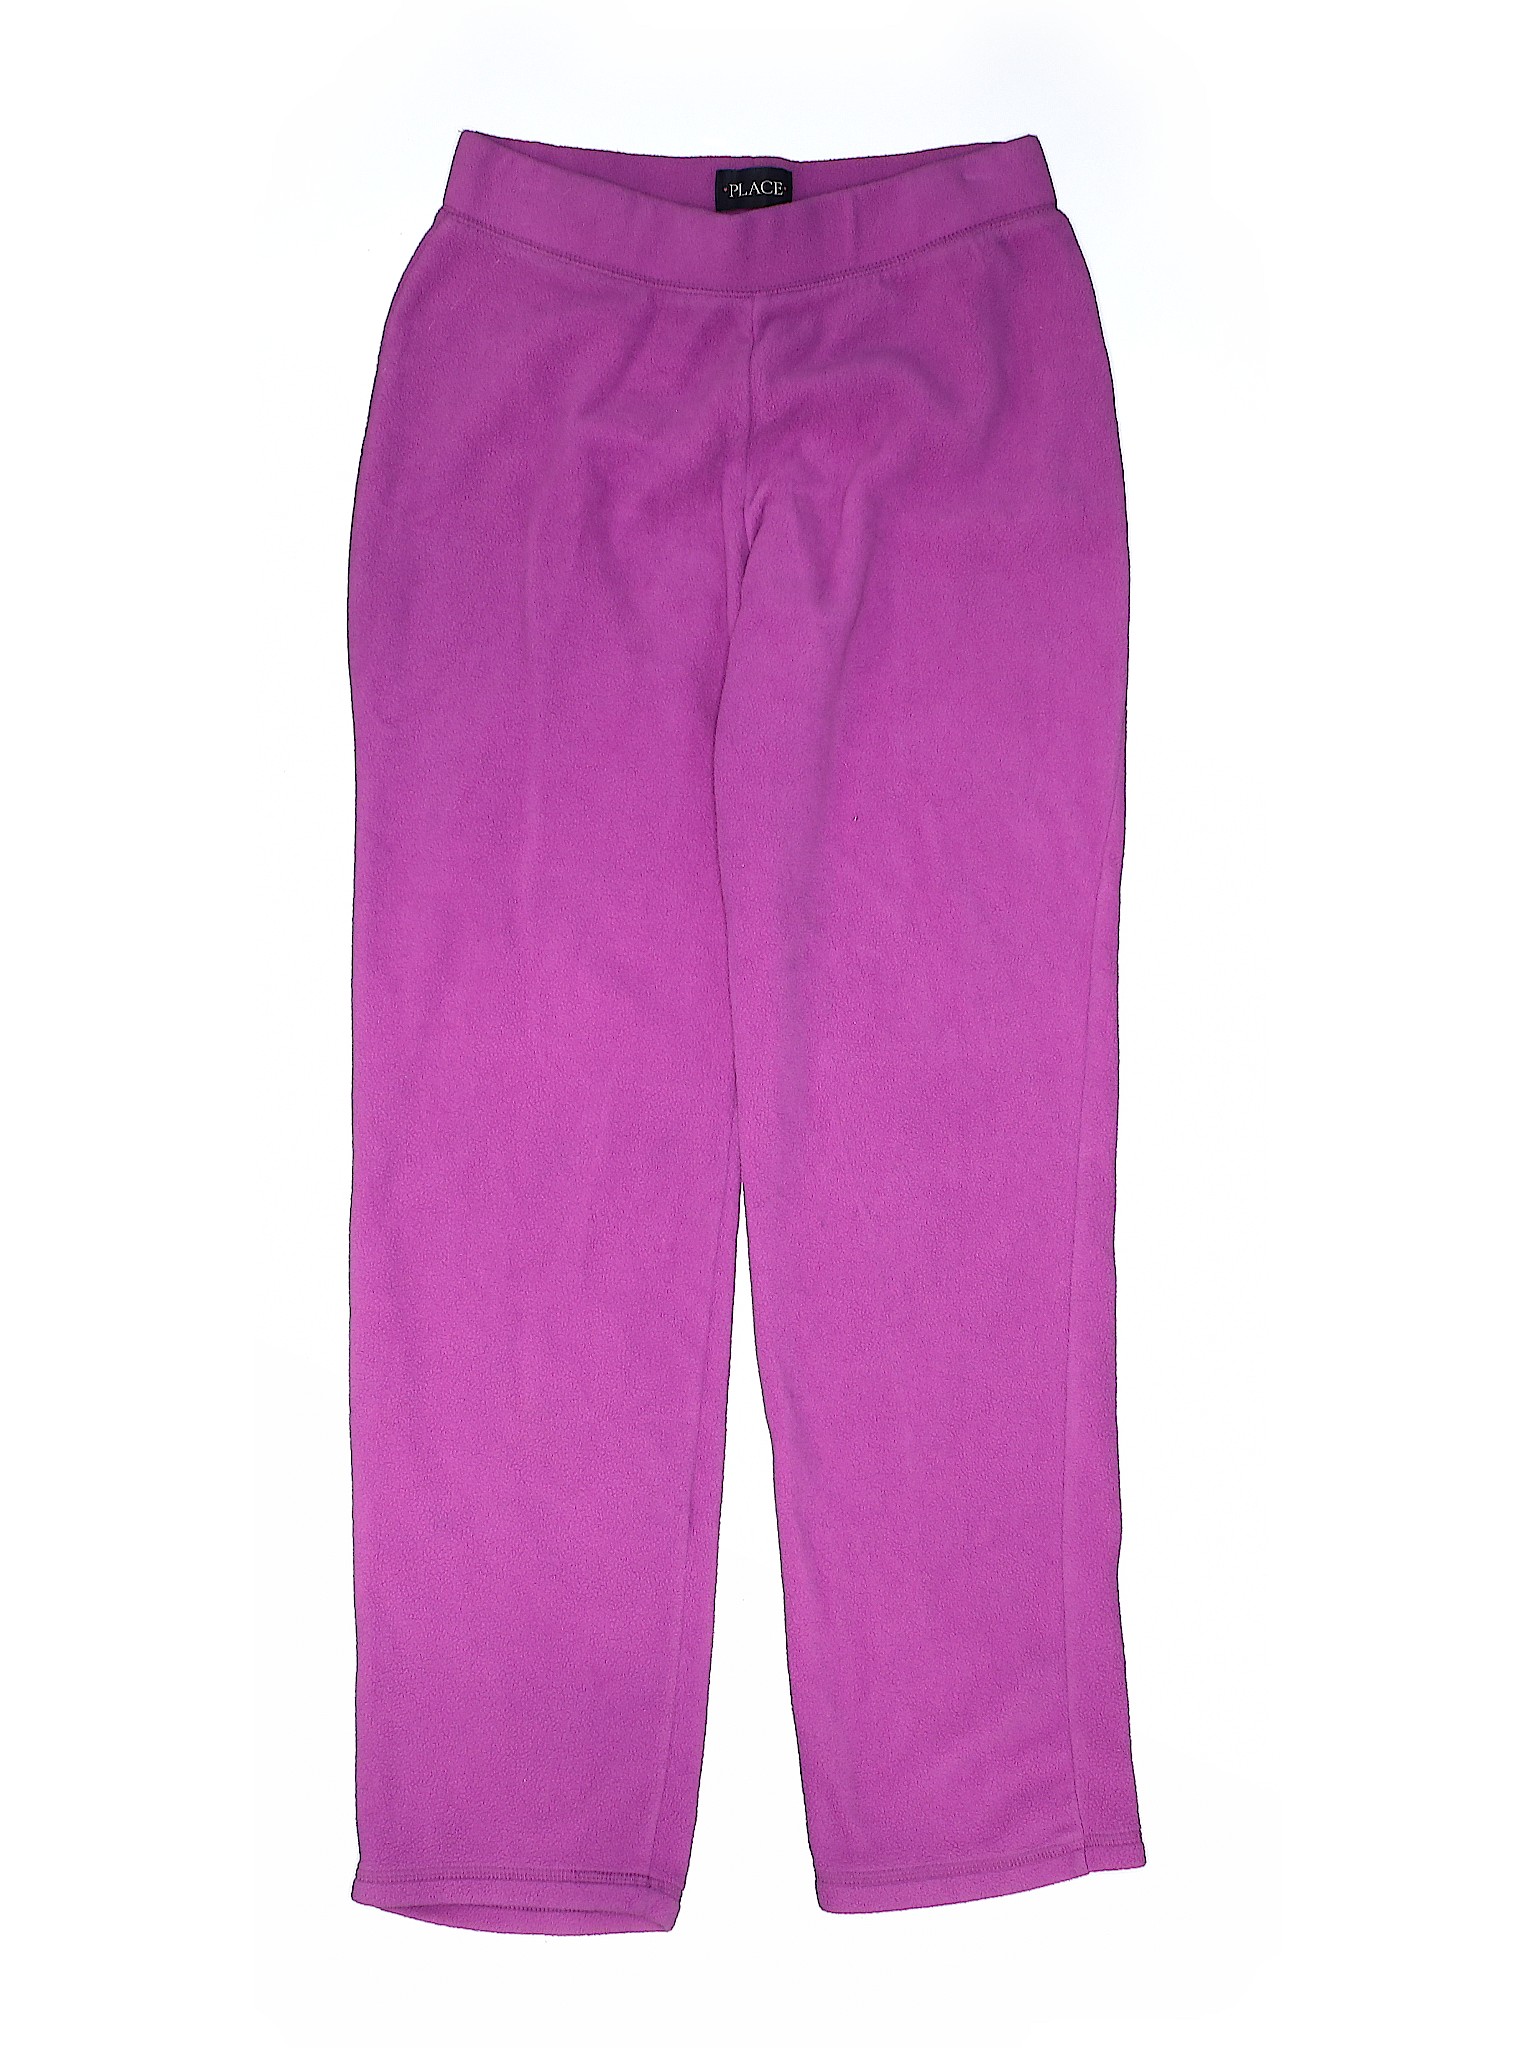 The Children's Place Girls Purple Sweatpants 16 | eBay